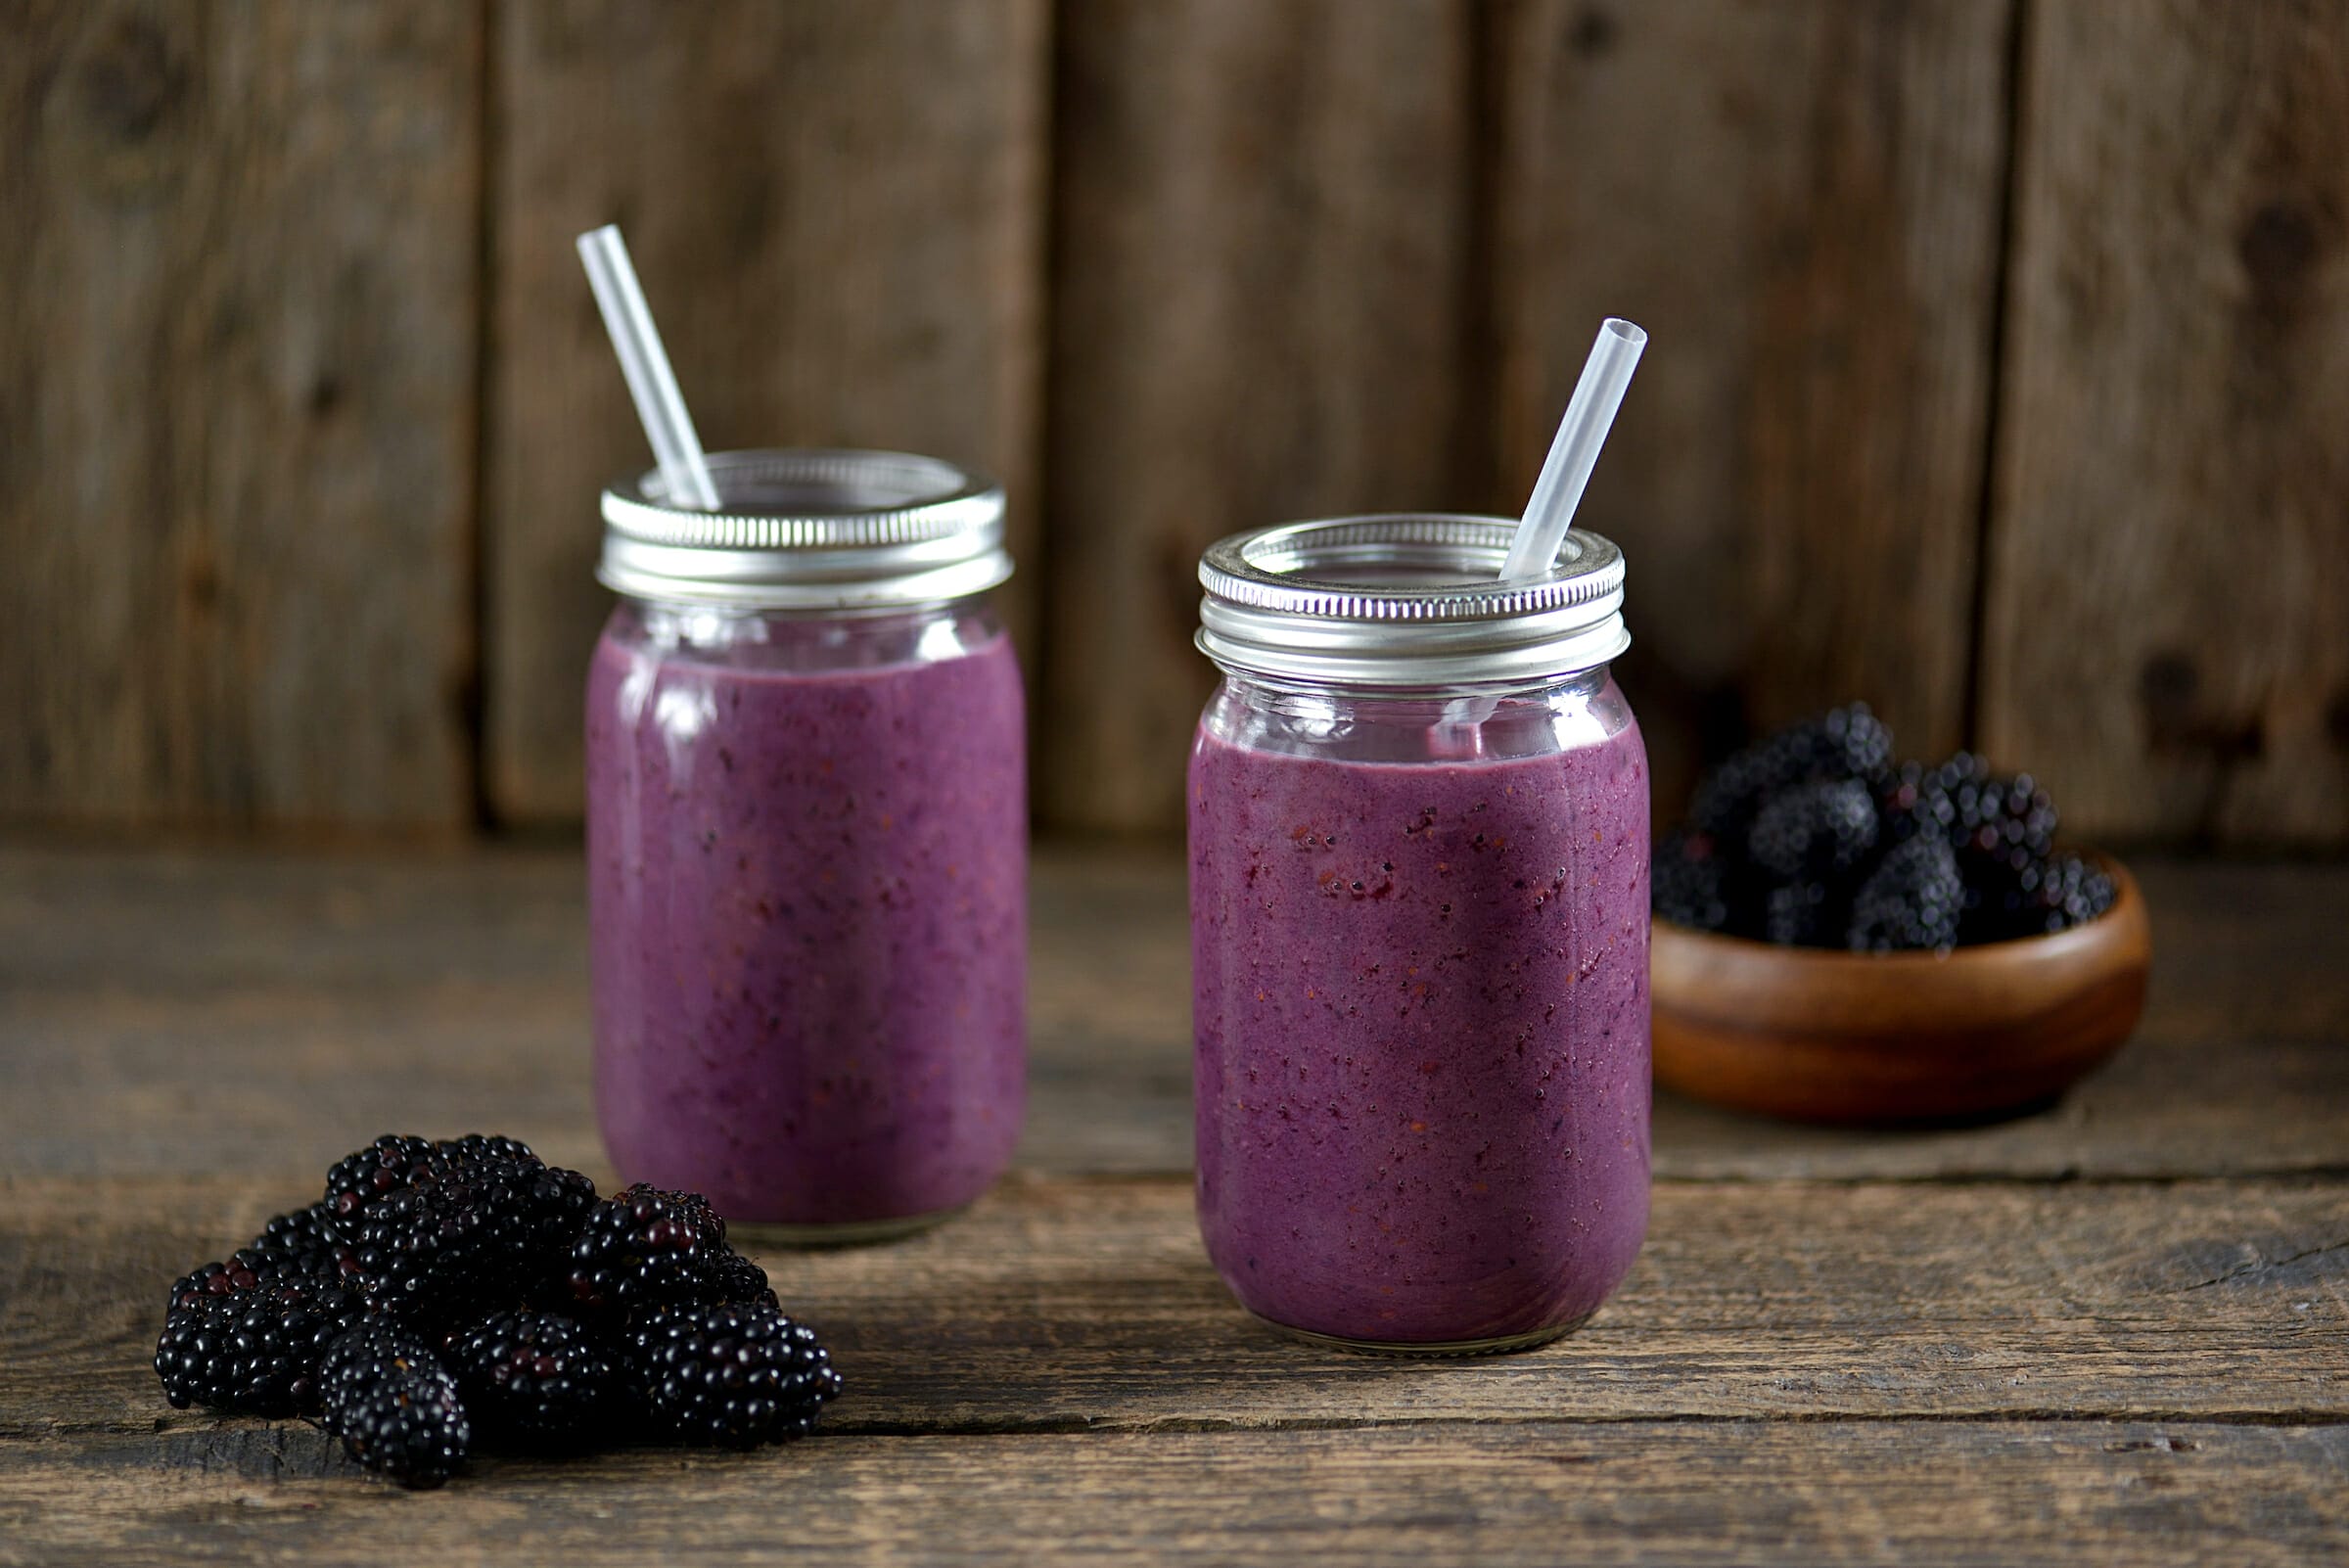 https://cdn.michaelkummer.com/wp-content/uploads/2019/08/Healthy-blackberry-organic-smoothie-with-natural-yogurt-and-honey-copy.jpg?strip=all&lossy=1&ssl=1